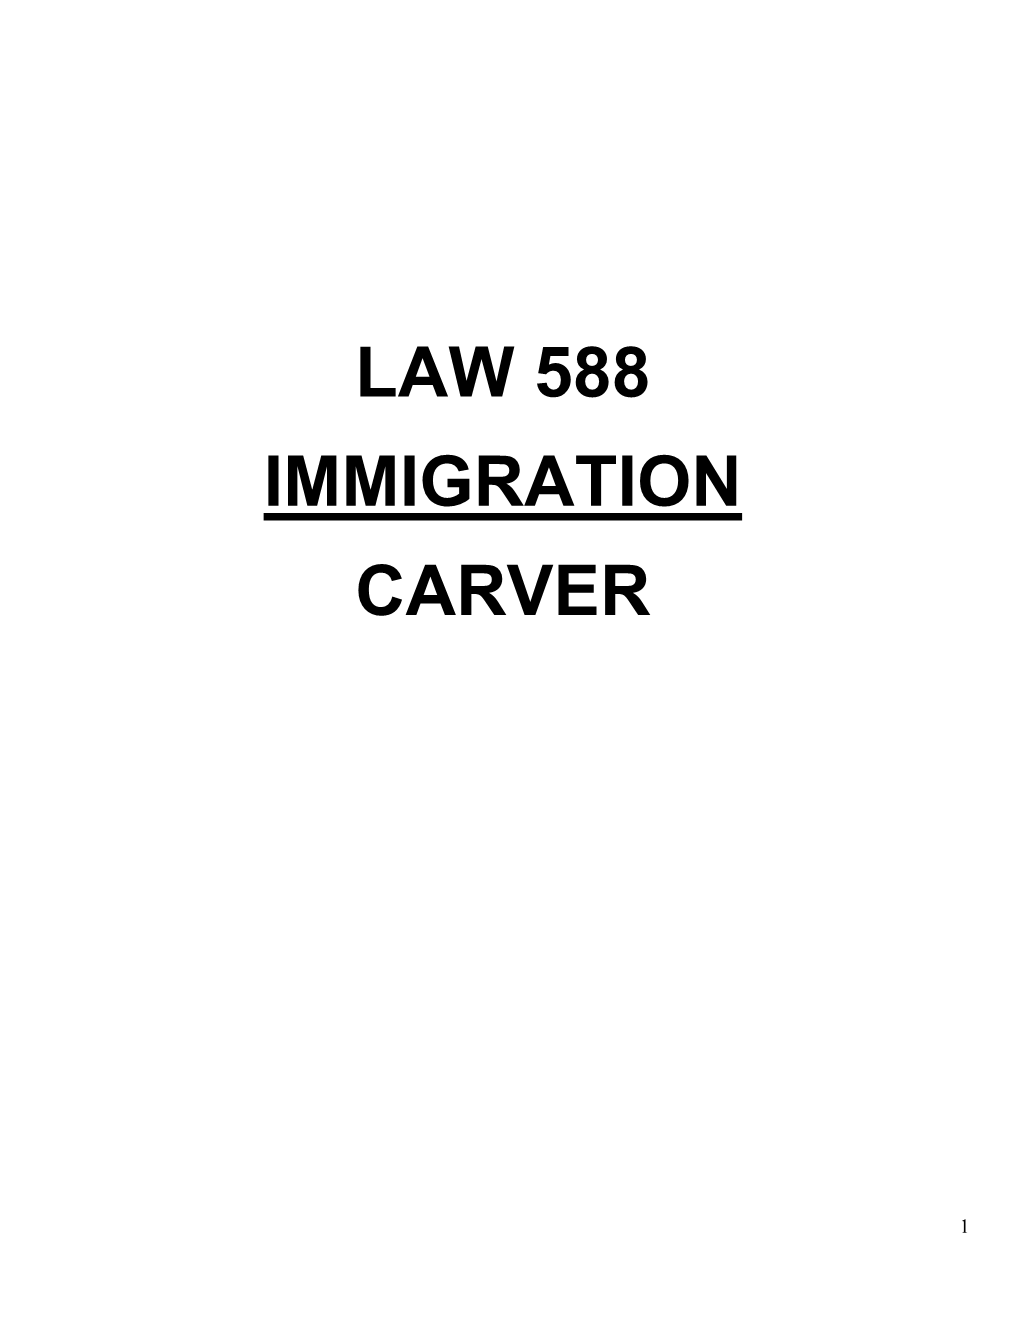 Law 588 Immigration Carver